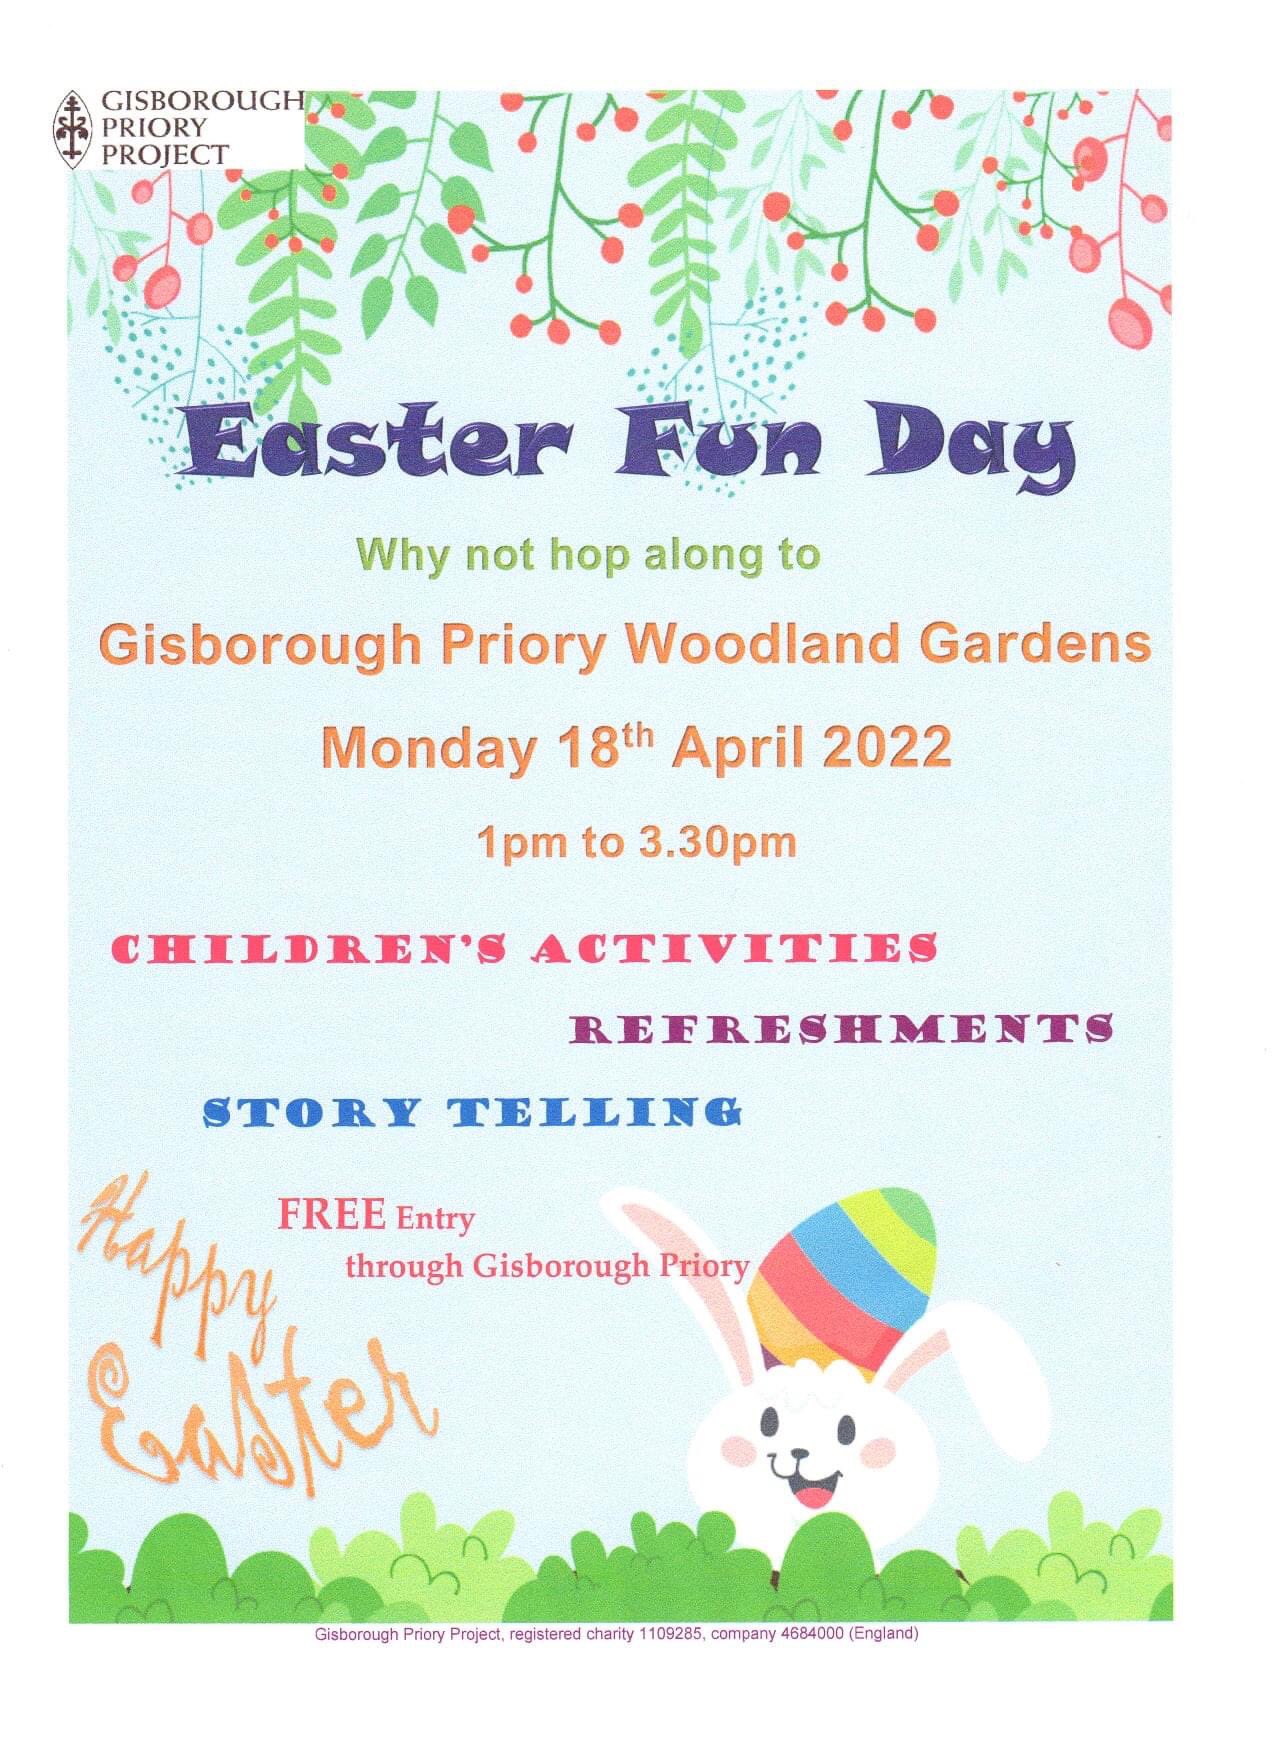 Easter family fun day at Gisborough Priory poster